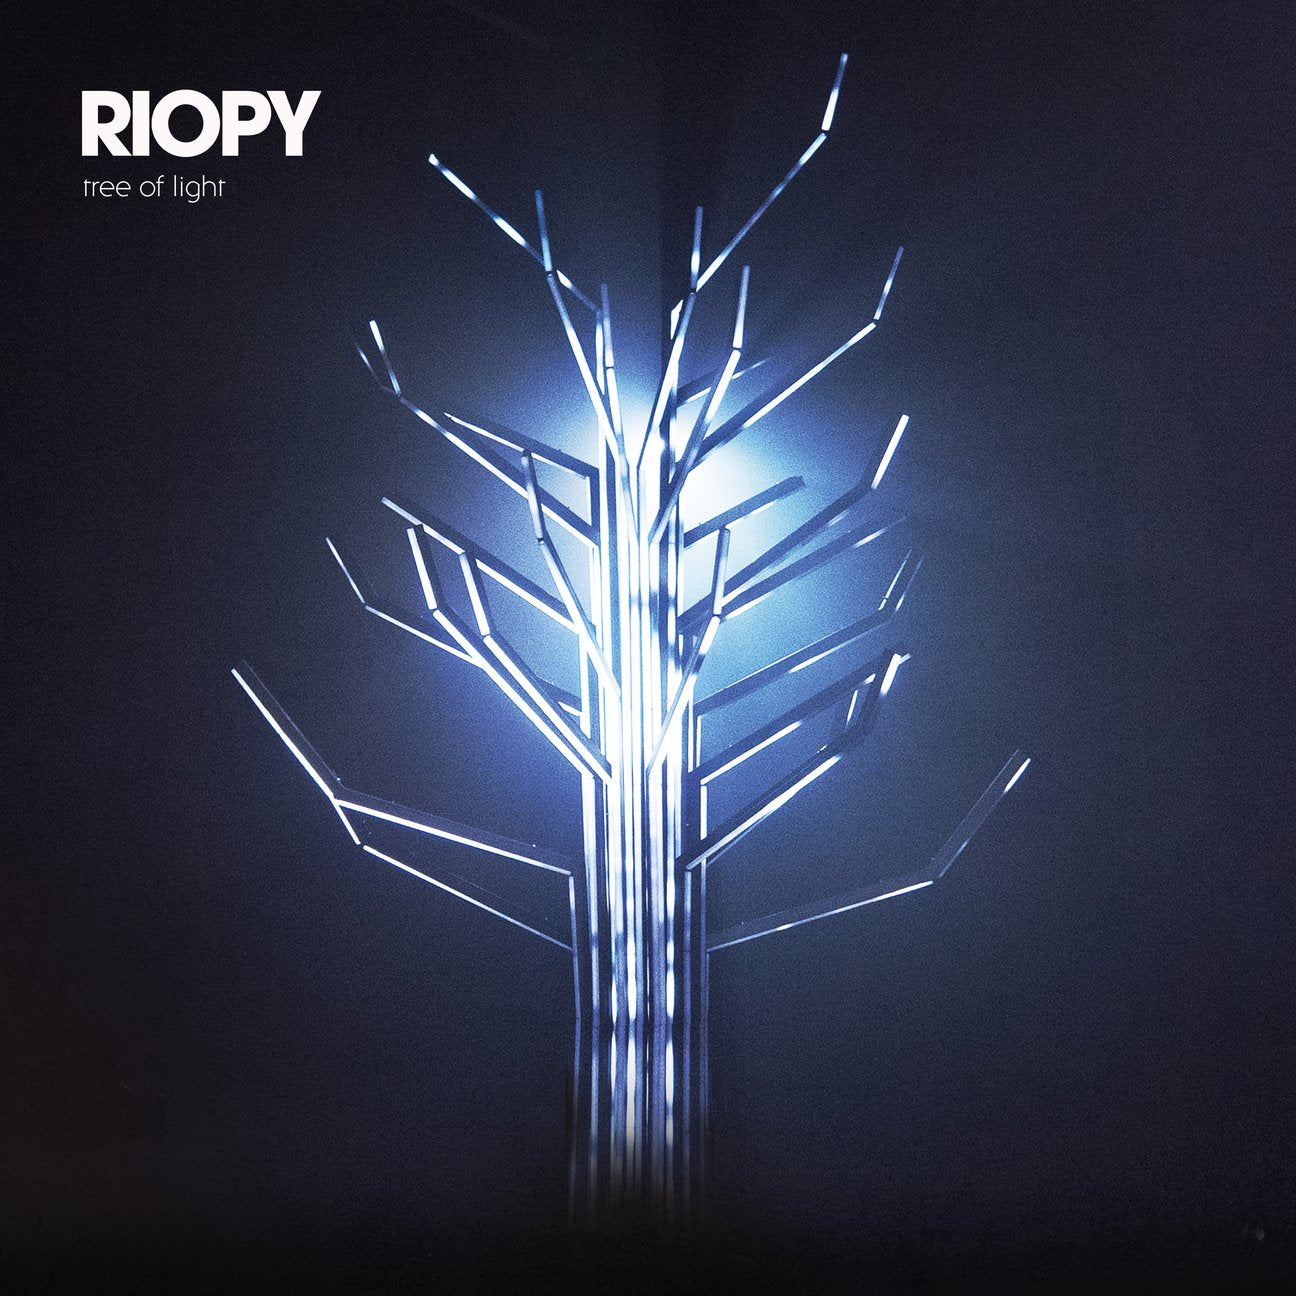 New World sheet music from RIOPY's Tree of Light album